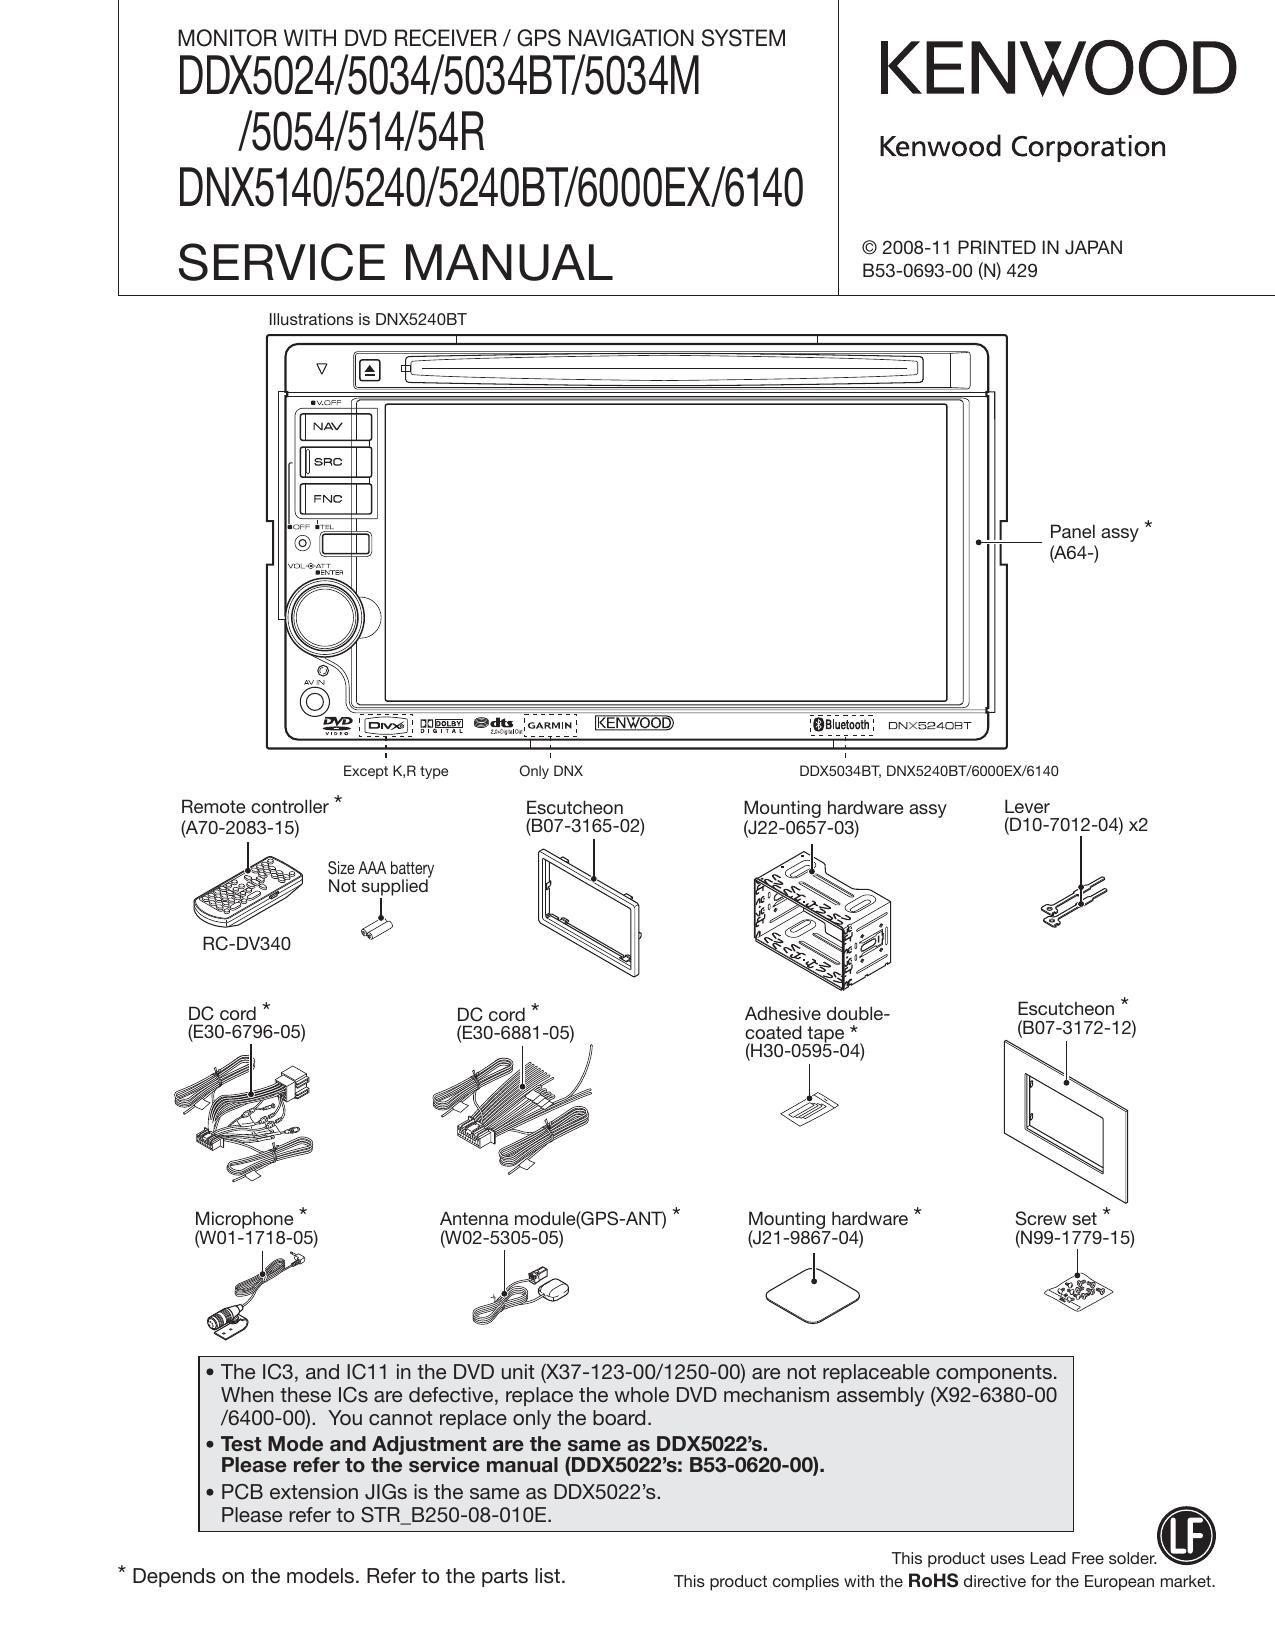 Kenwood DDX 5024 HU Service Manual